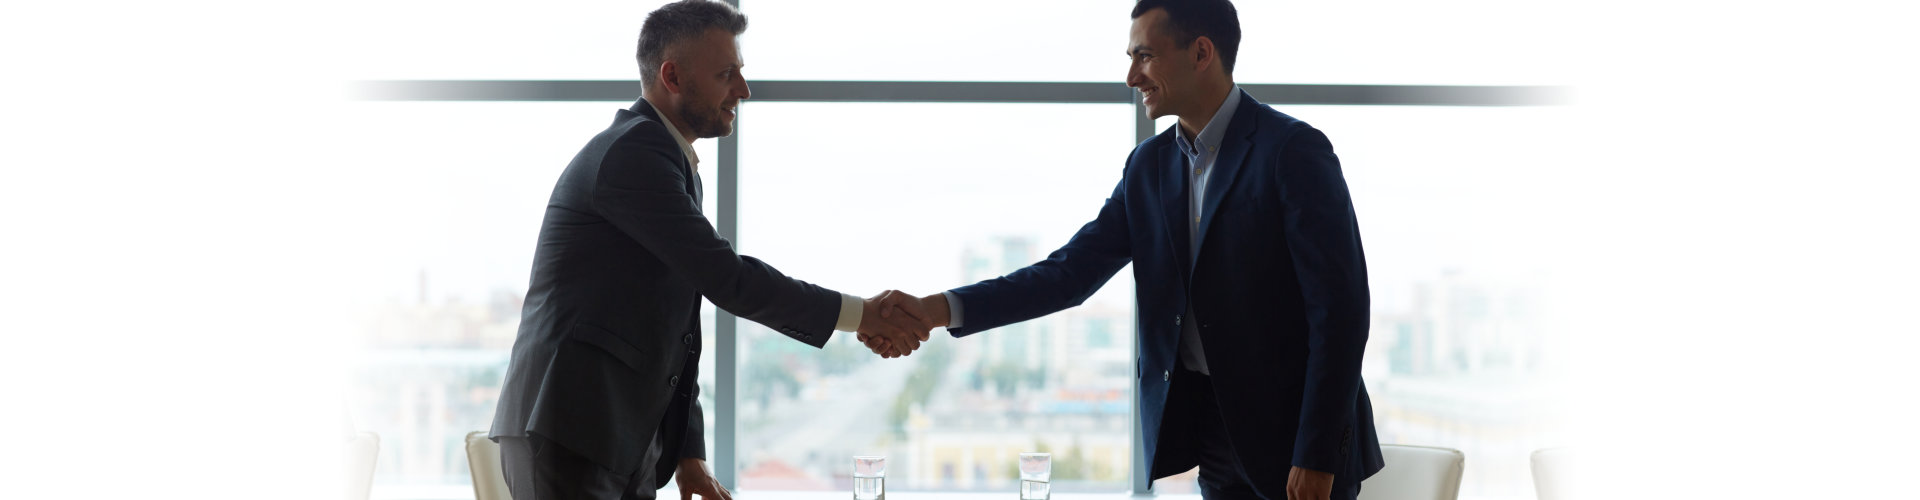 two business man handshaking